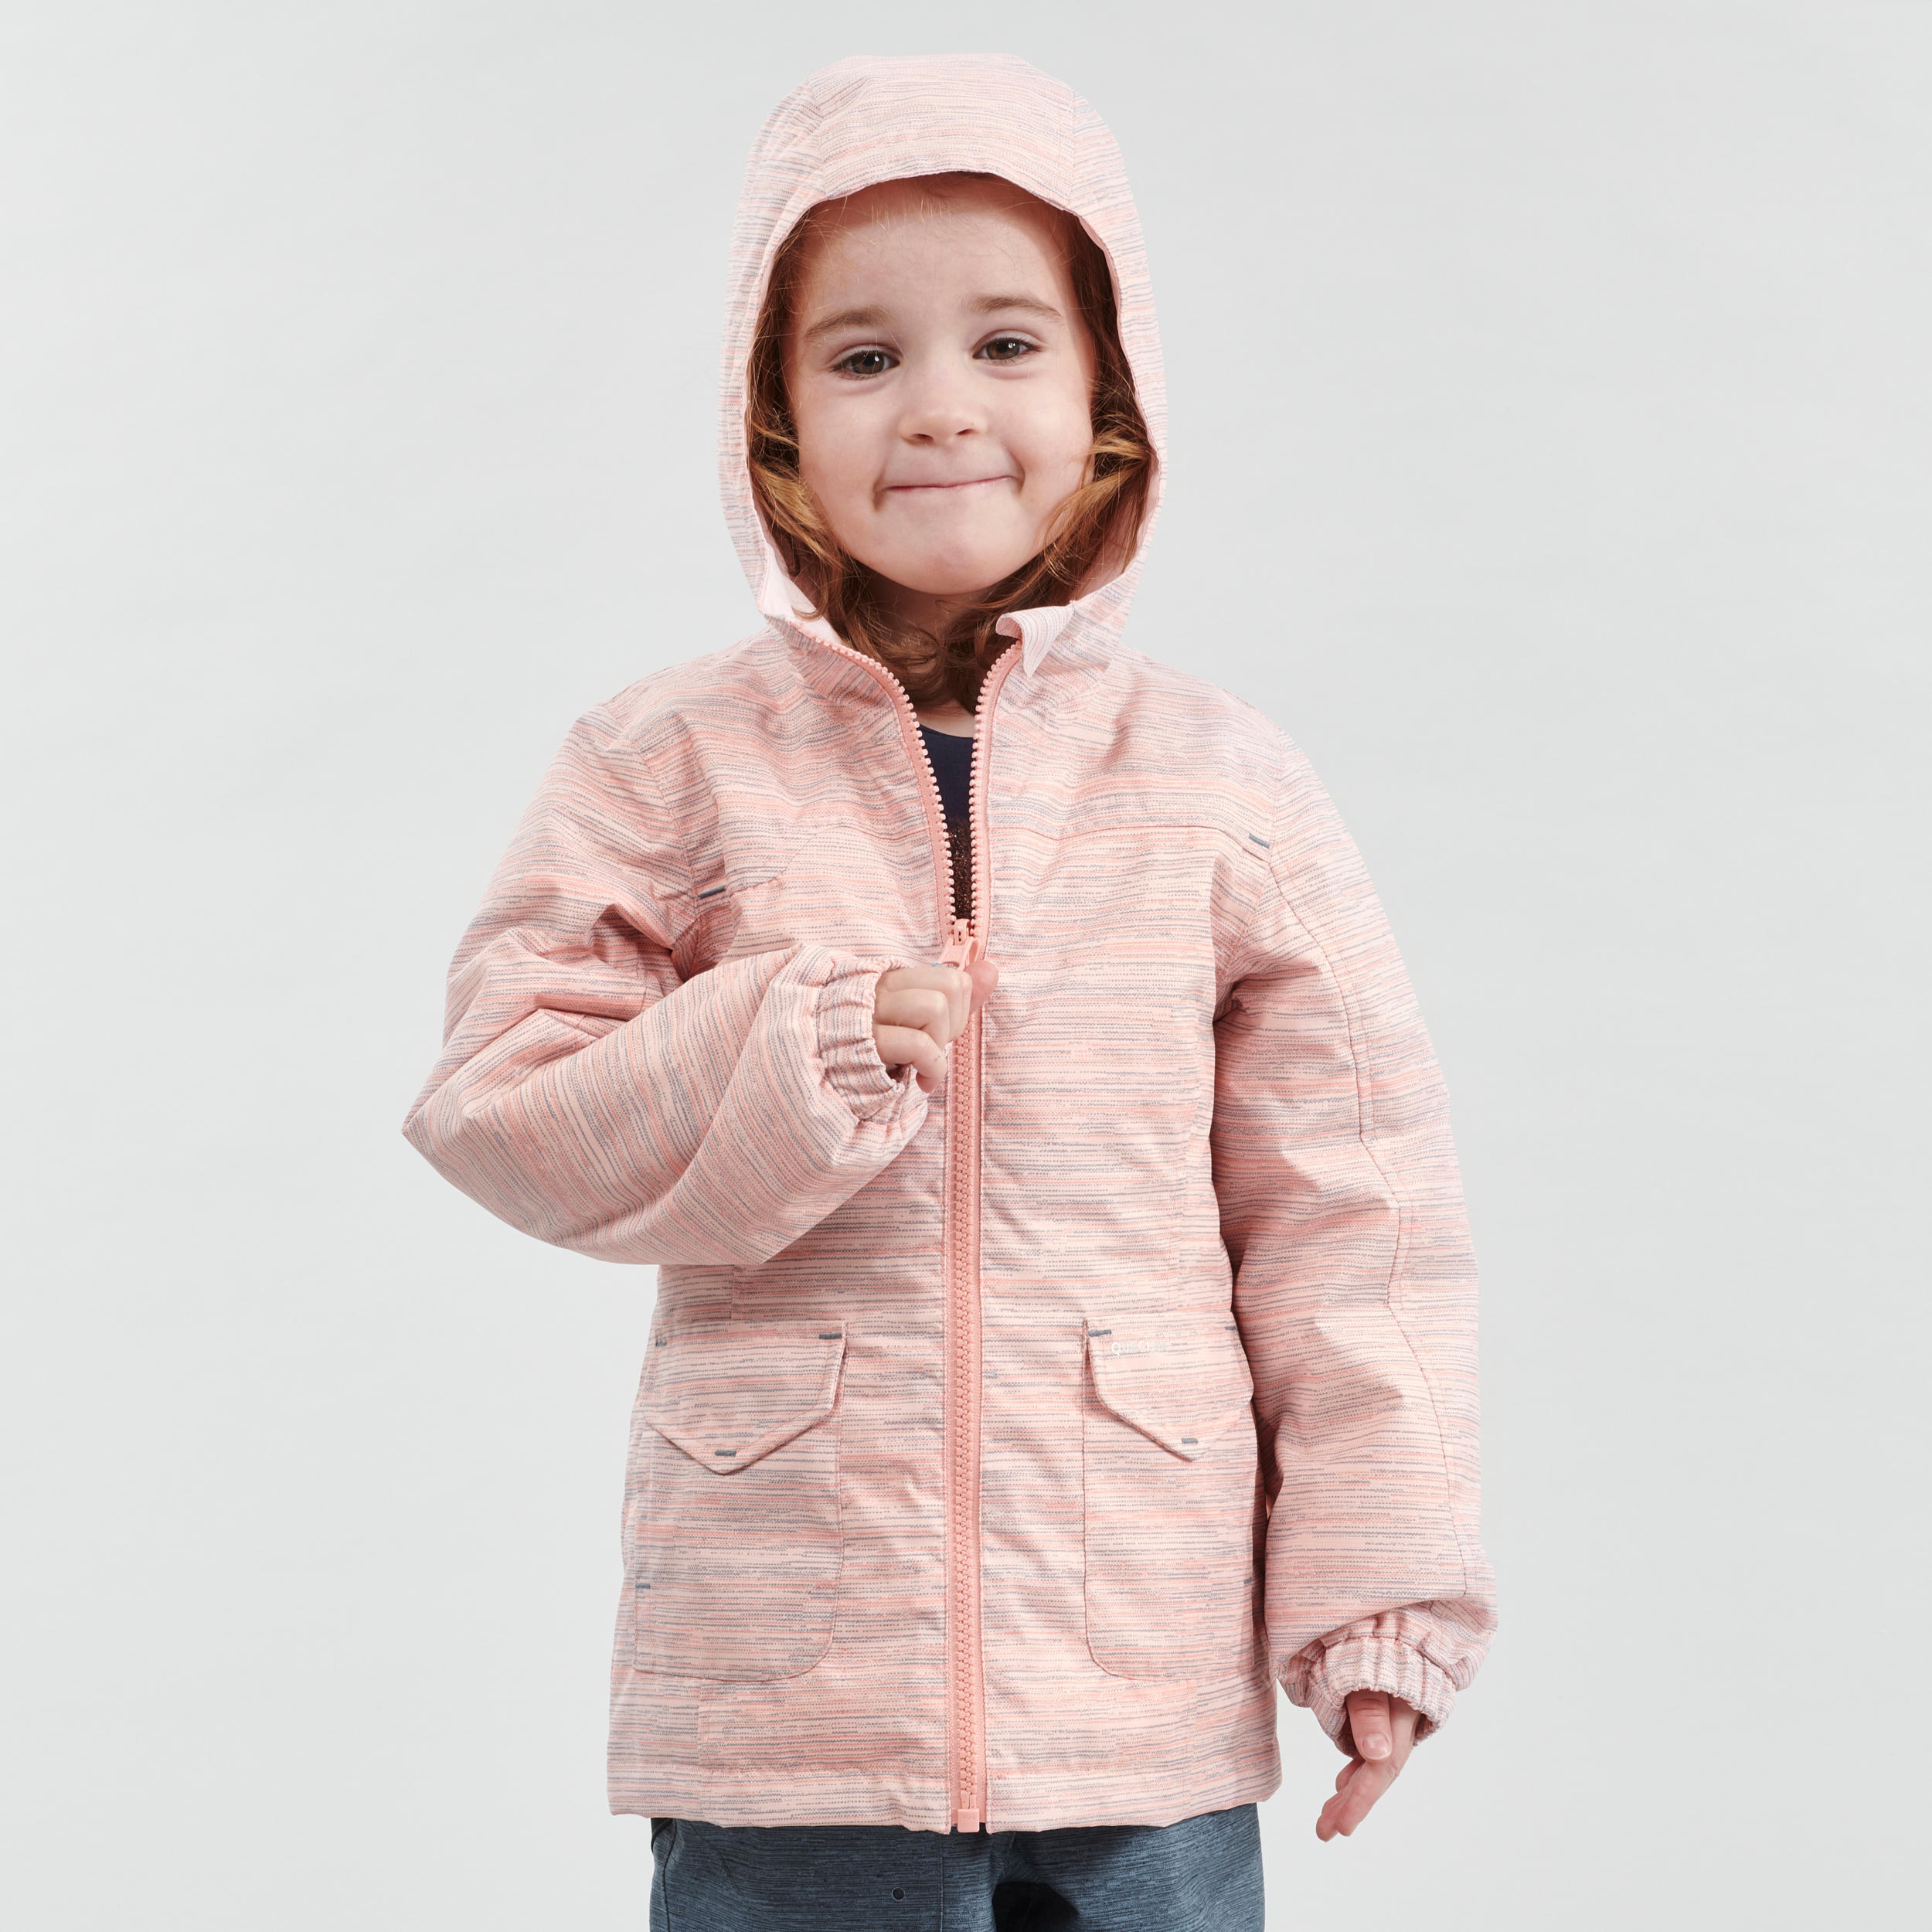 Kids’ Waterproof Winter Hiking Jacket SH100 Warm 2-6 Years 2/7